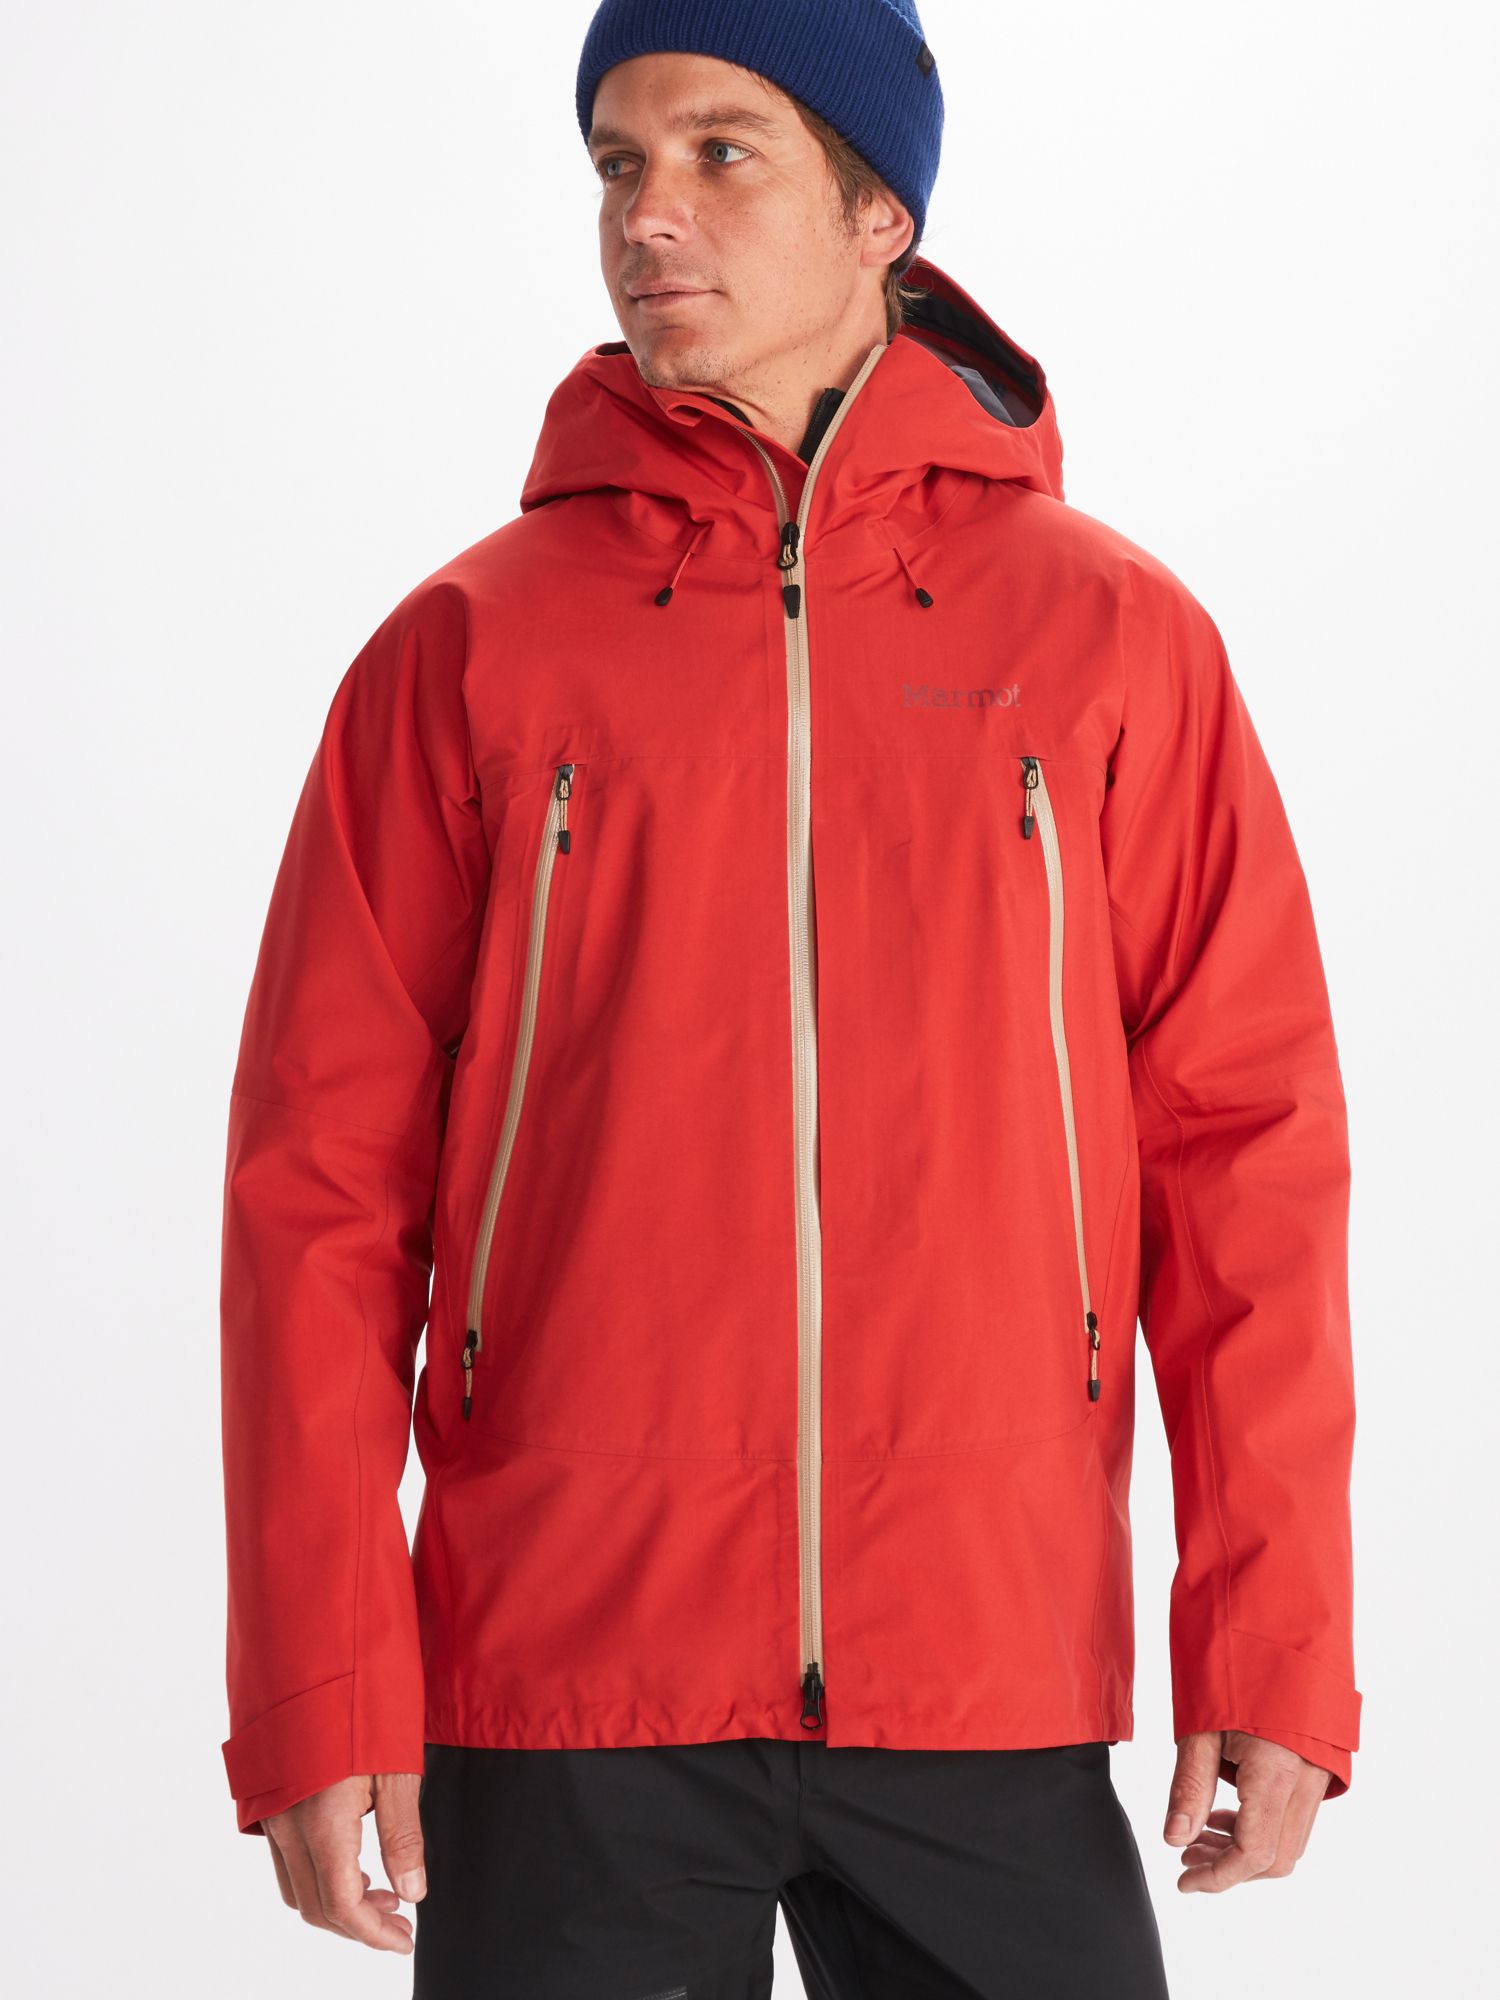 Alpinist GORE-TEX Jacket | Marmot